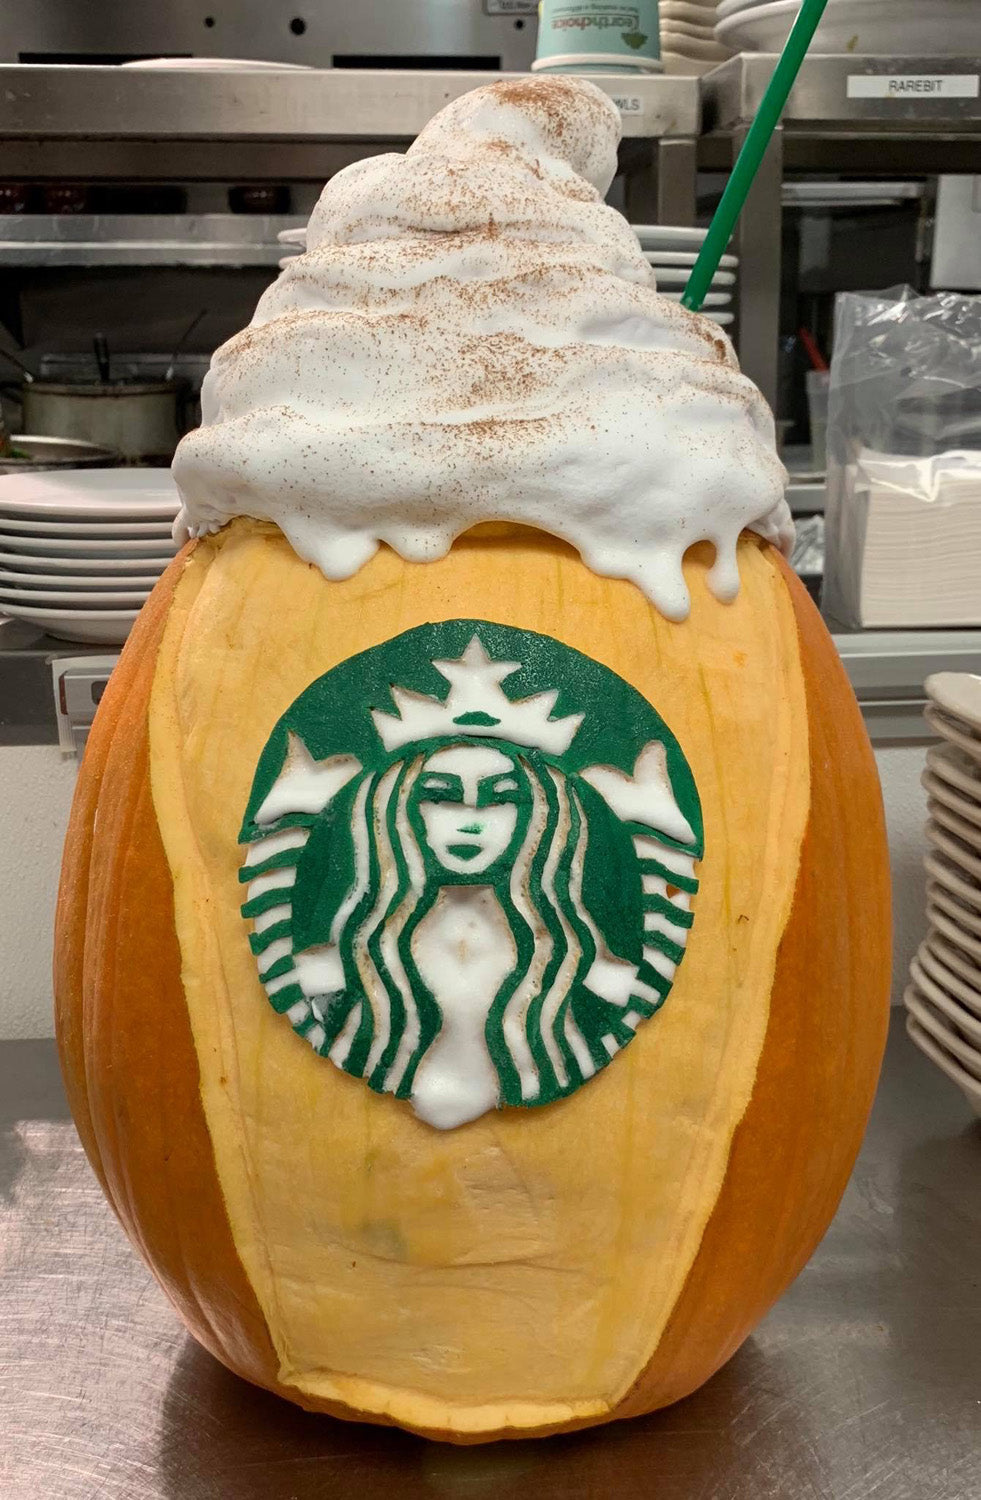 The Starbucks Pumpkin